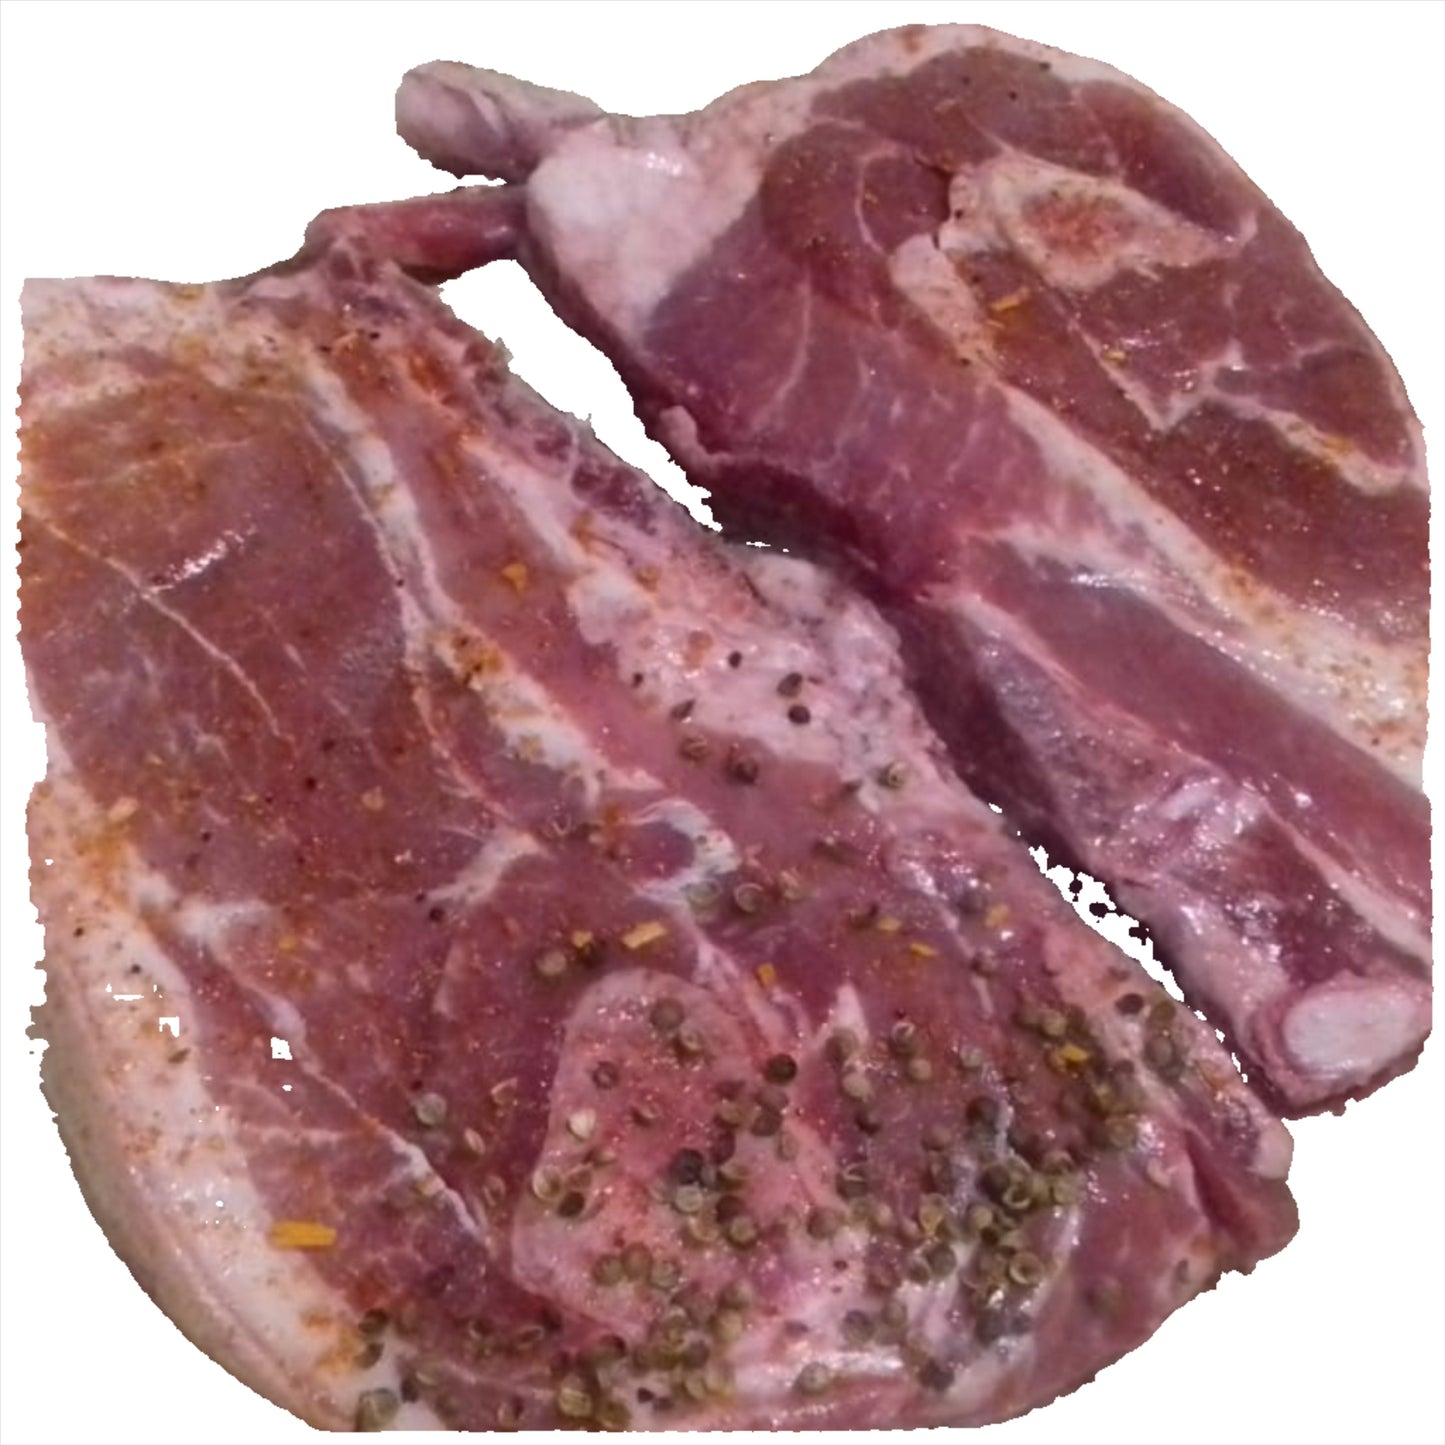 Vark: Skouertjop (Pork: Texan steak)